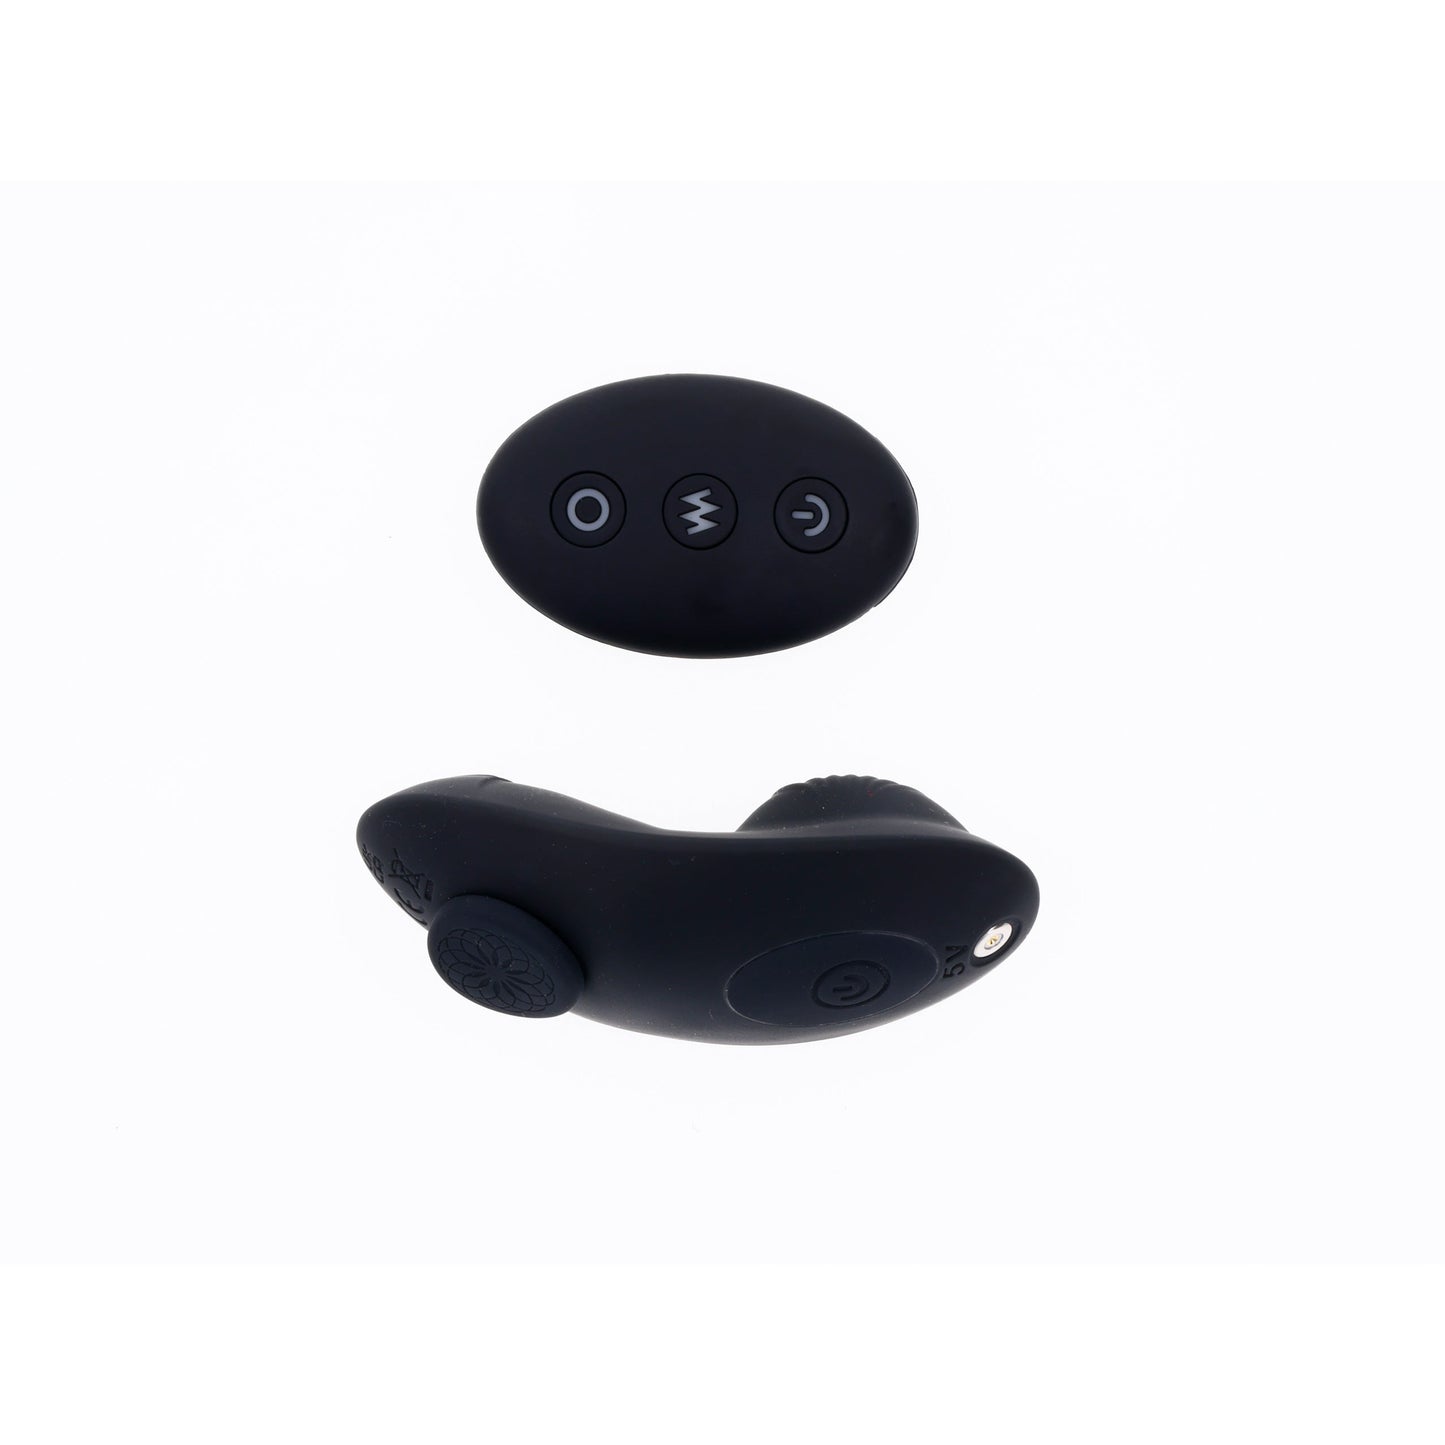 Hidden Pocket Strap on With Remote Control  Vibrator - Black